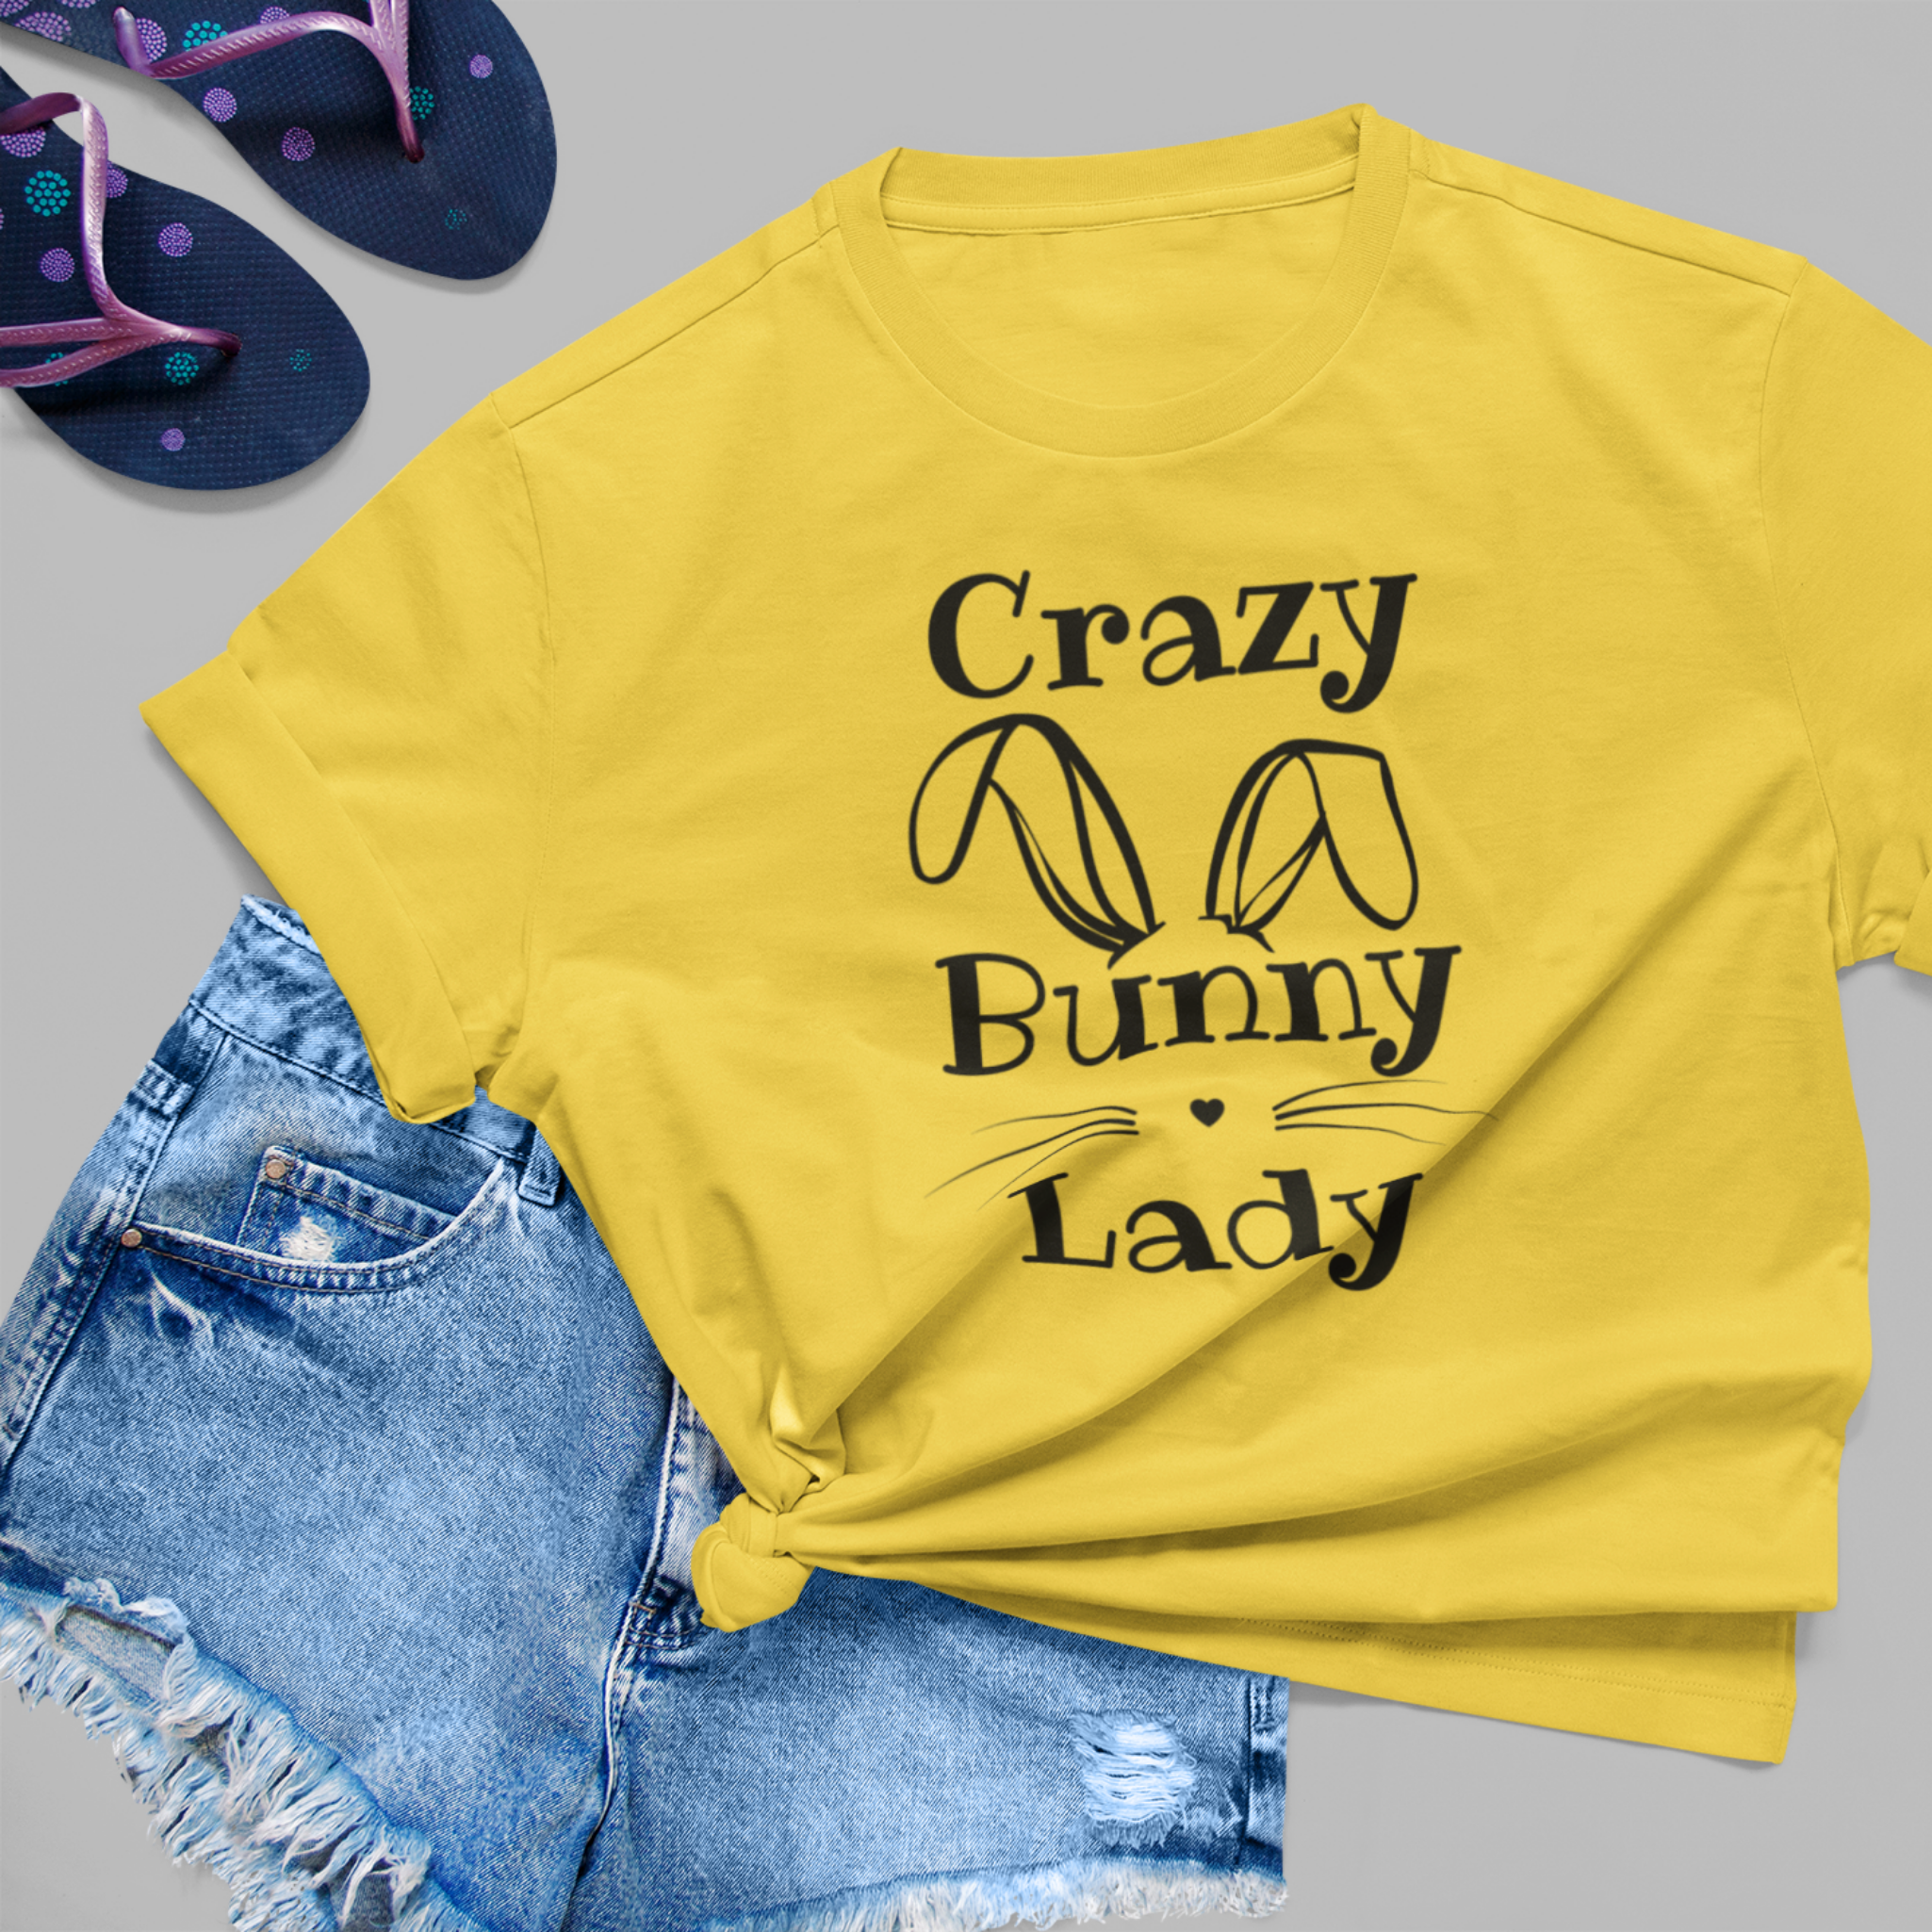 Crazy Bunny Lady Tee